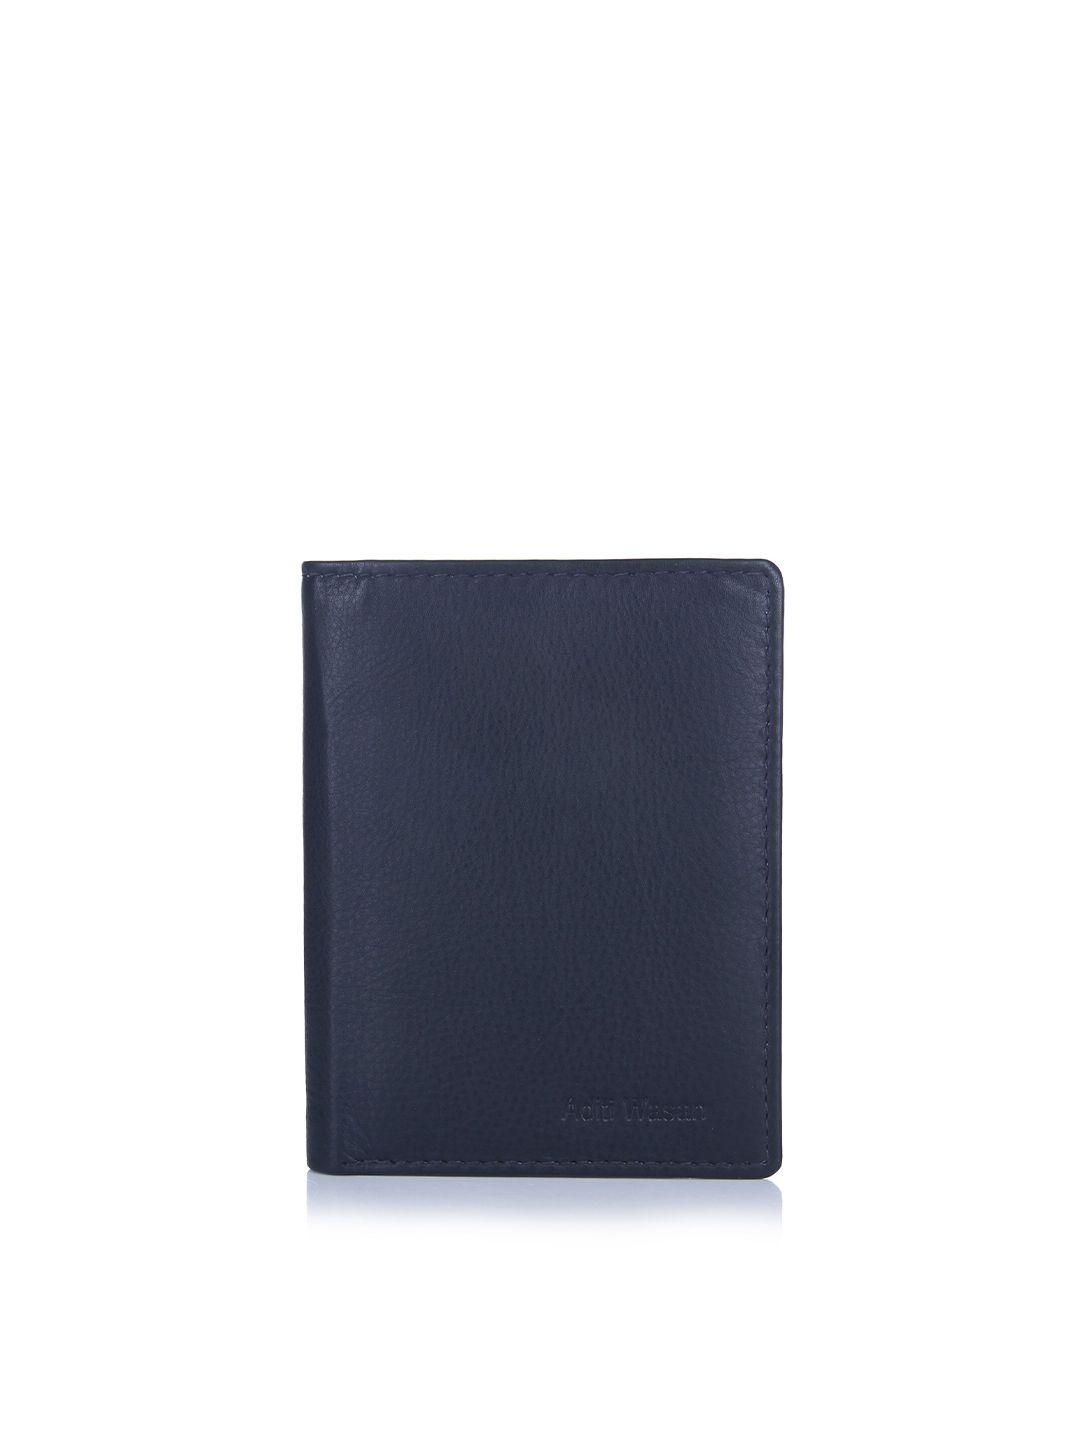 aditi wasan blue leather card holder